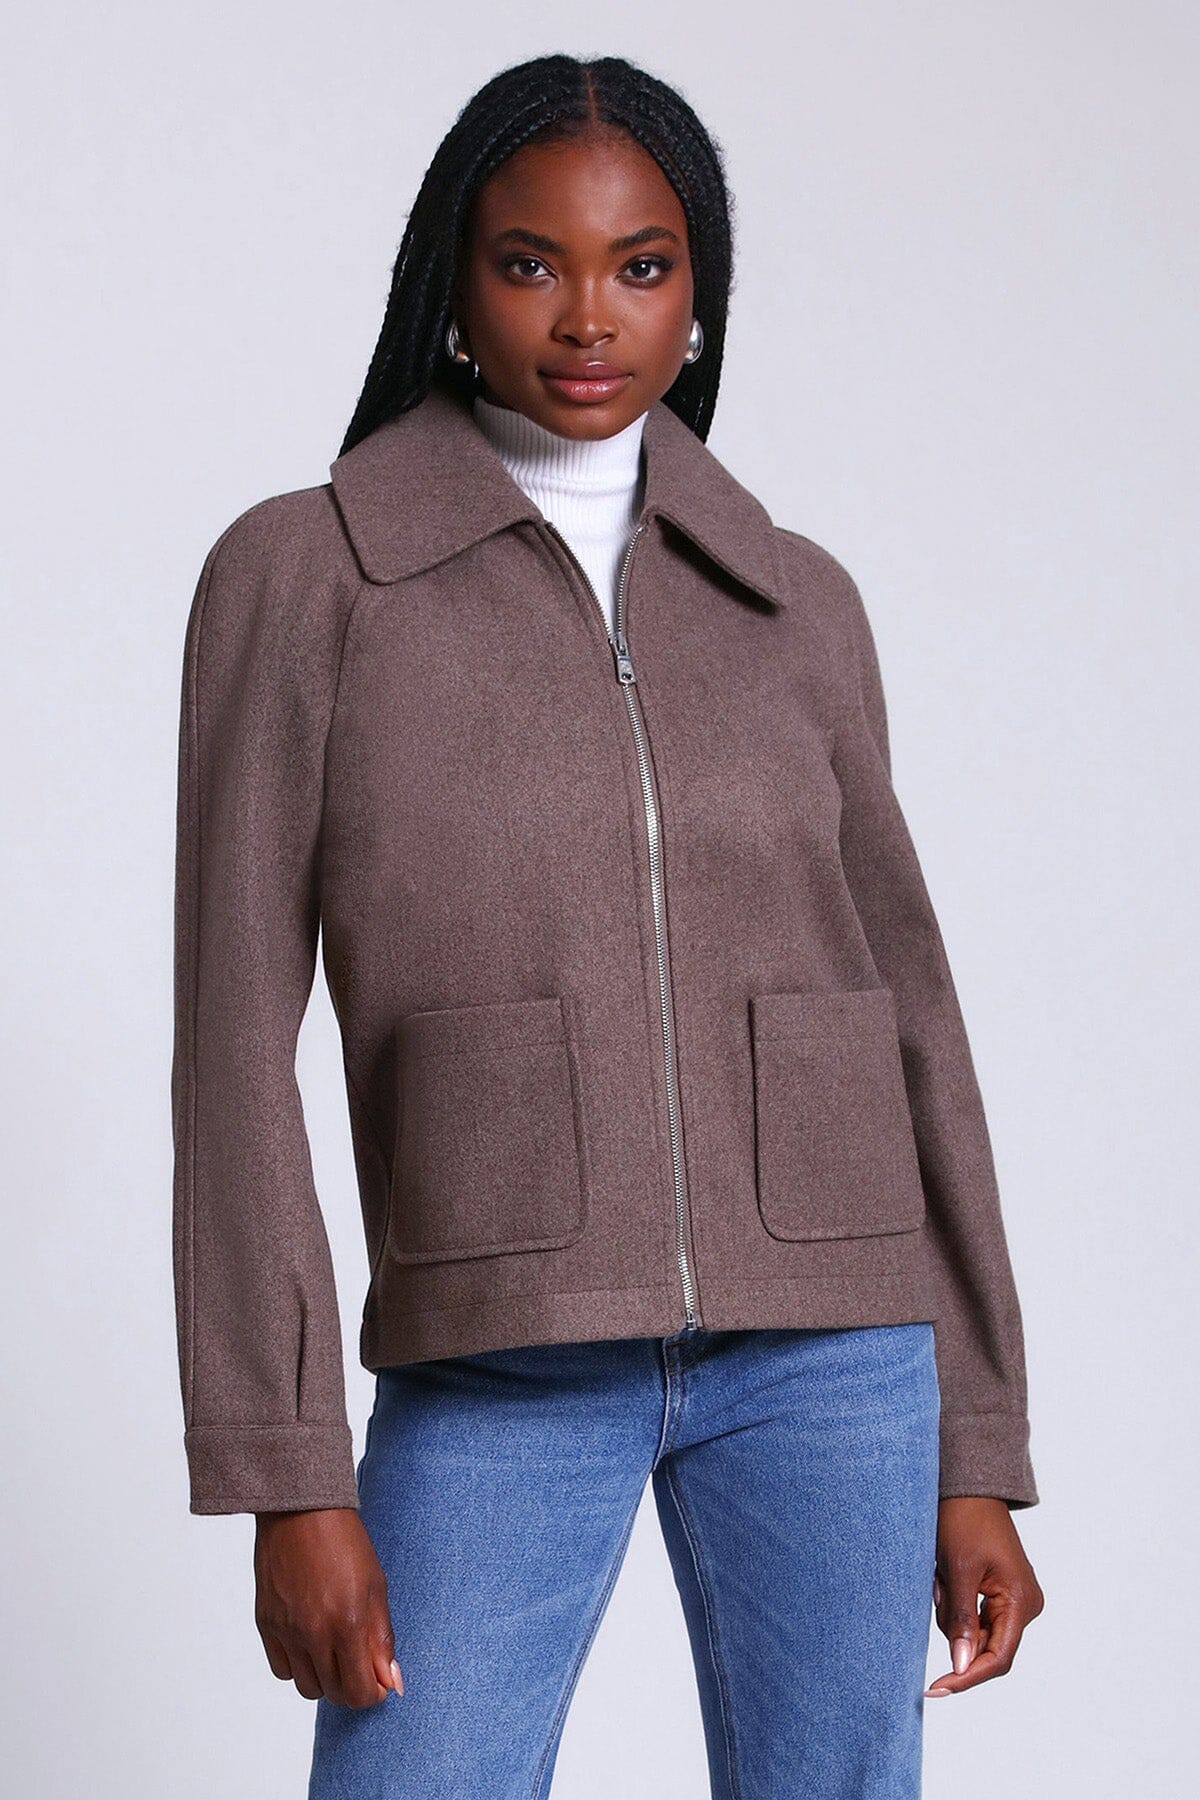 relaxed zip front jacket coat mocha brown - women's figure flattering designer fashion day to night coats jackets for women